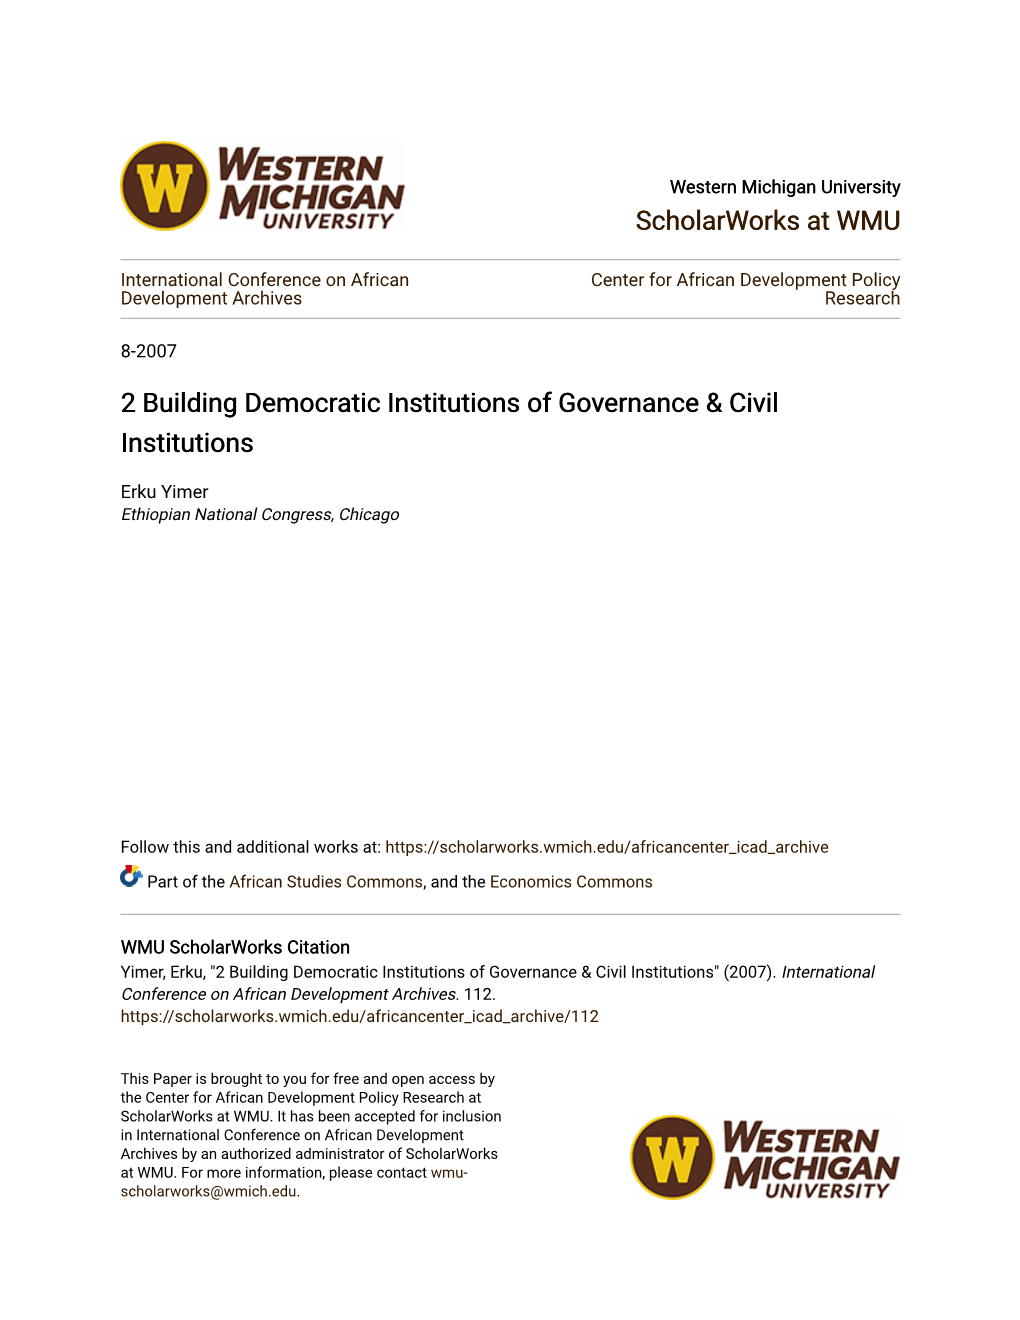 2 Building Democratic Institutions of Governance & Civil Institutions